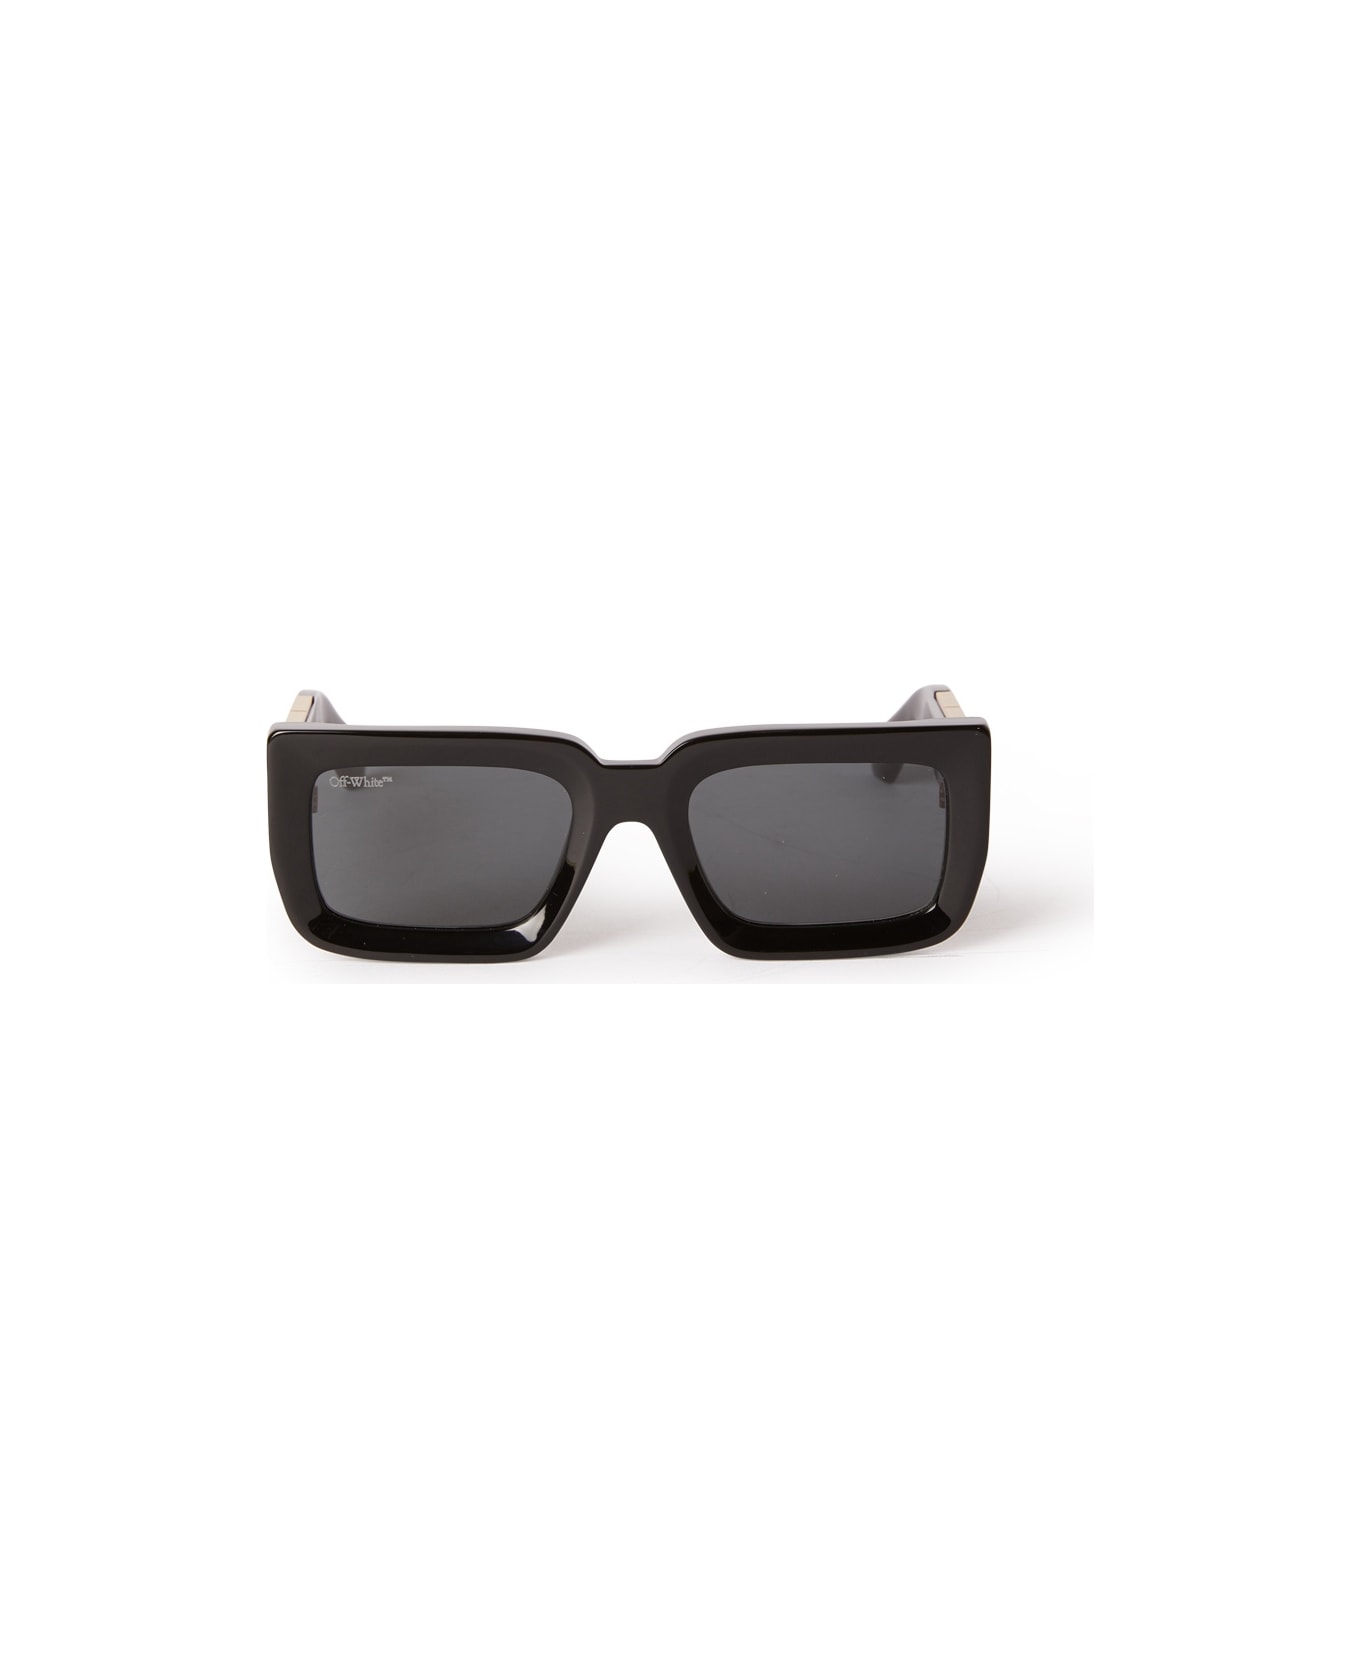 Off-White BOSTON SUNGLASSES Sunglasses - Black